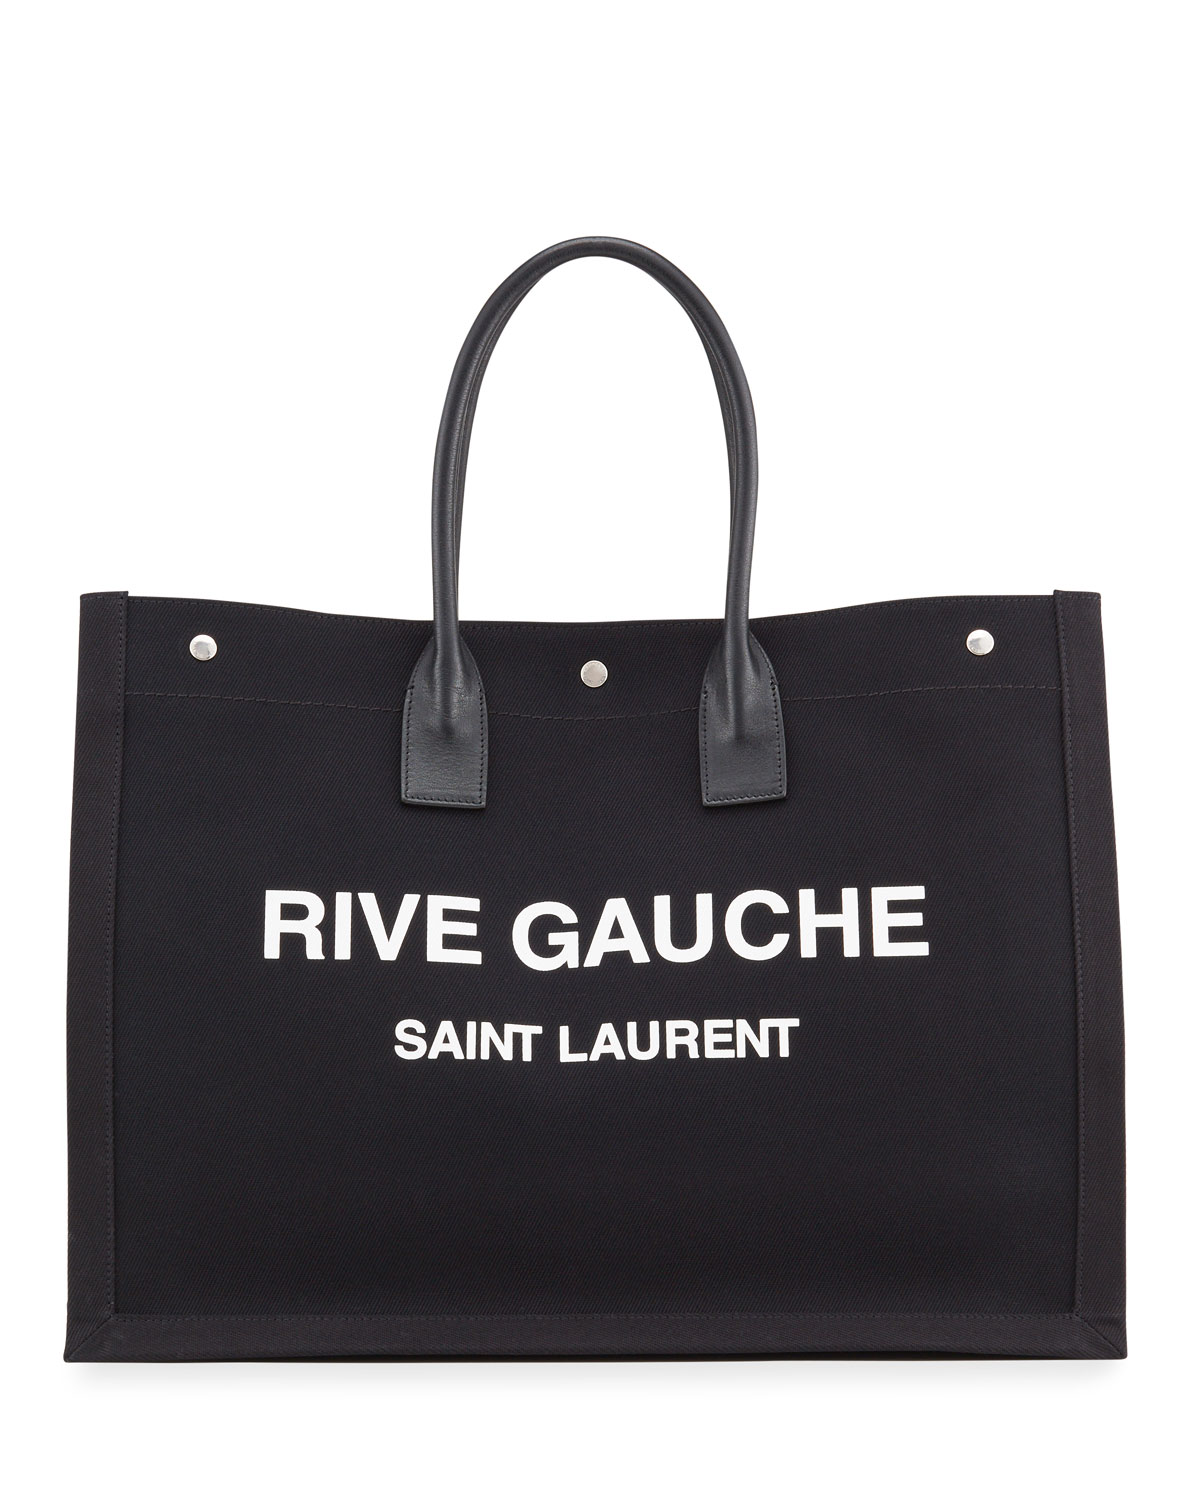 Saint Laurent Rive Gauche Tote Review - Life with Mar